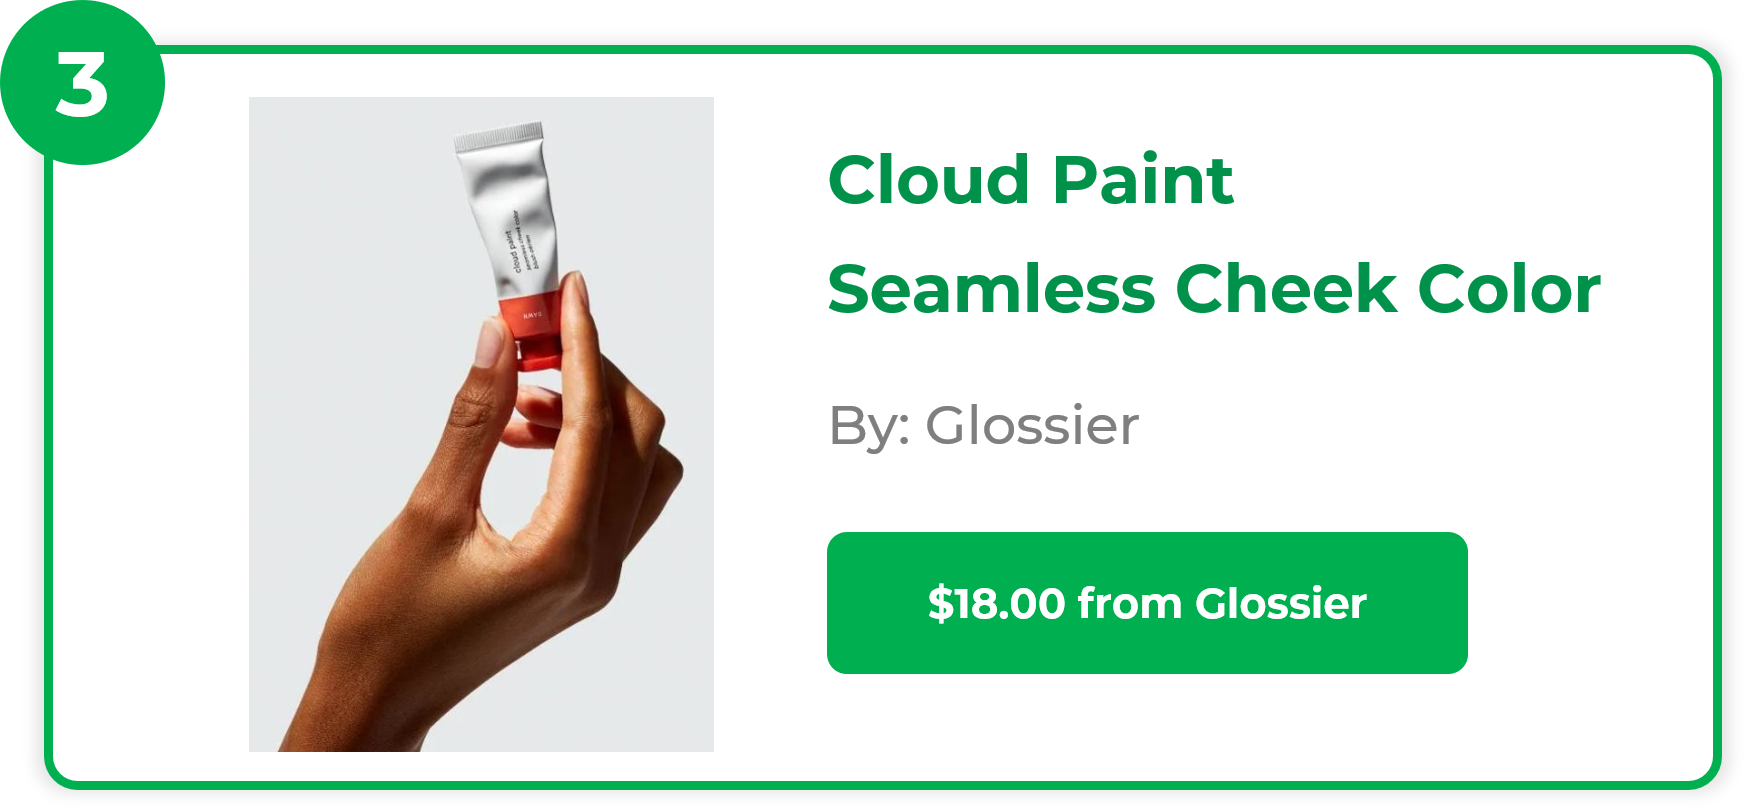 Cloud Paint Seamless Cheek Color - Glossier